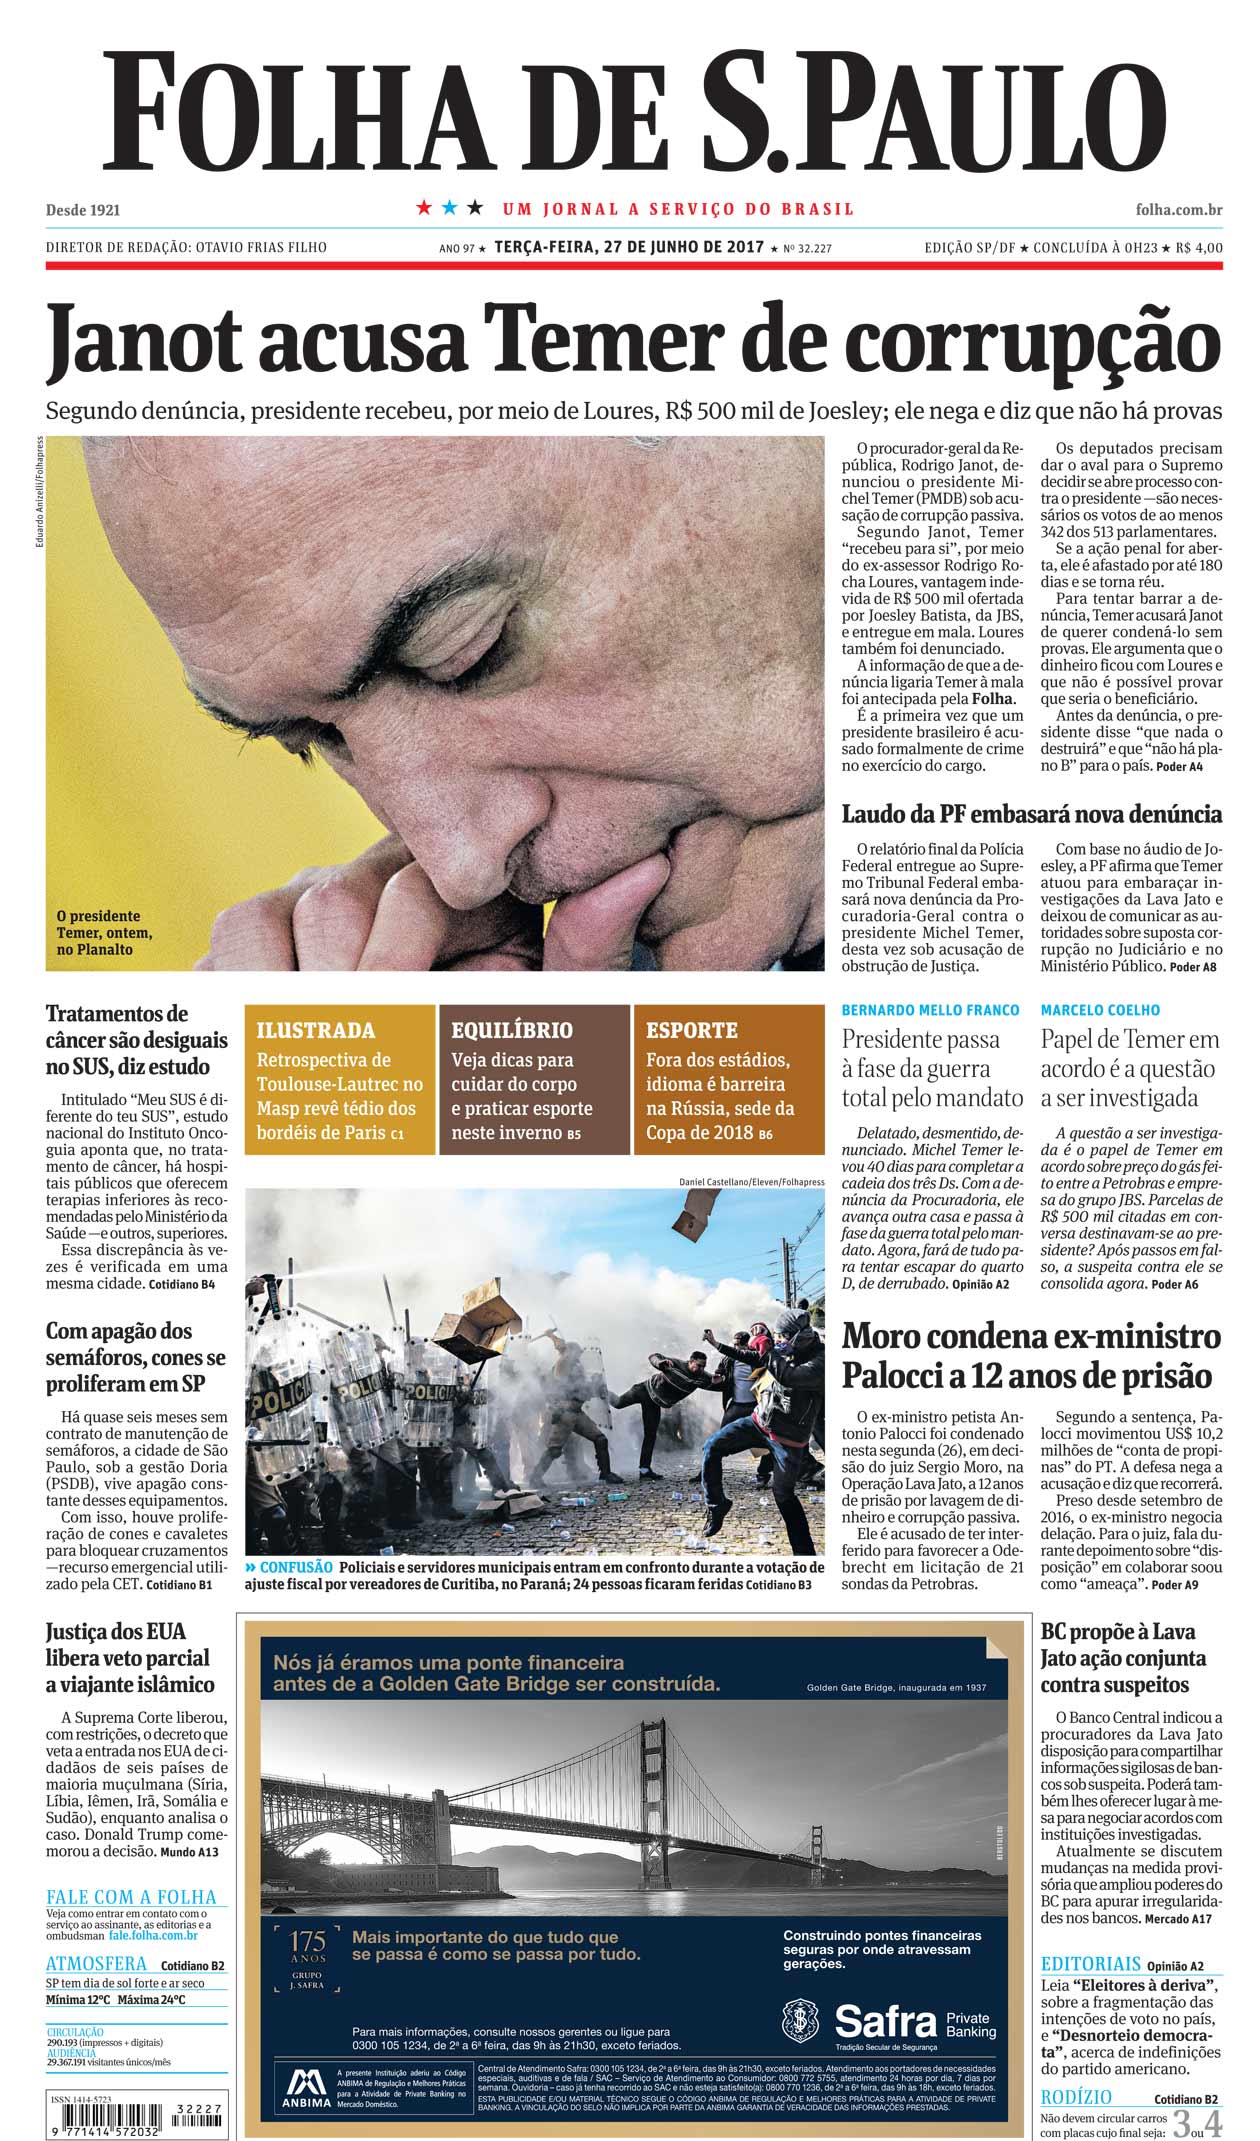 Capa Folha de S.Paulo - Edio So Paulo